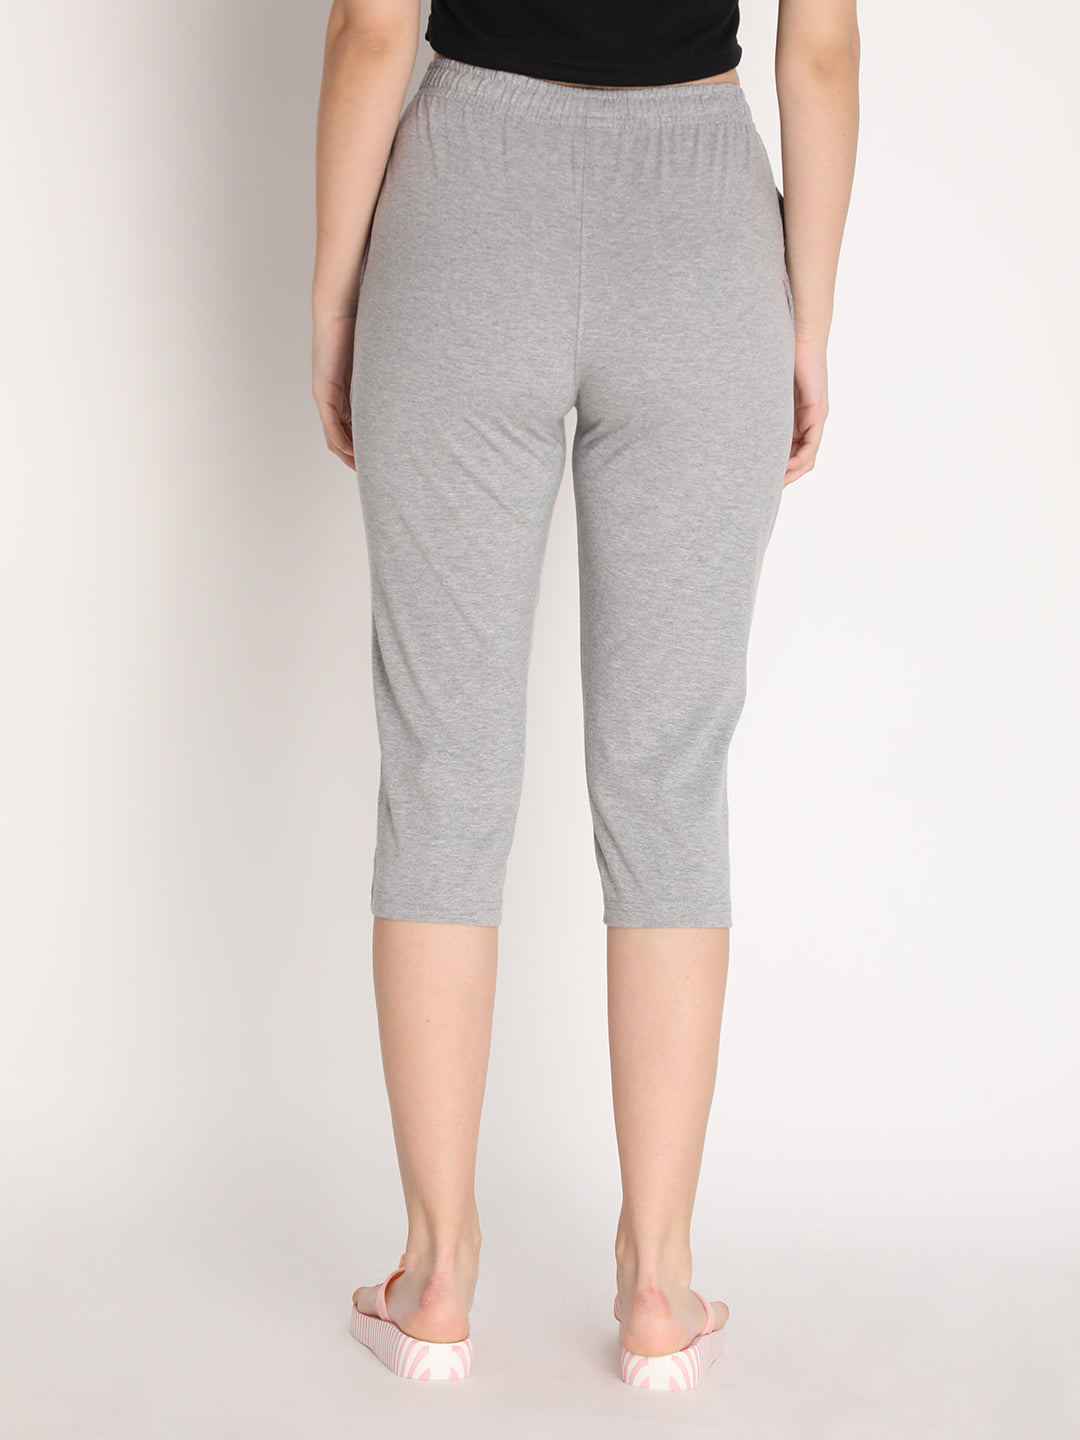 NEVA Women Cotton Capri Pants- Milange Grey